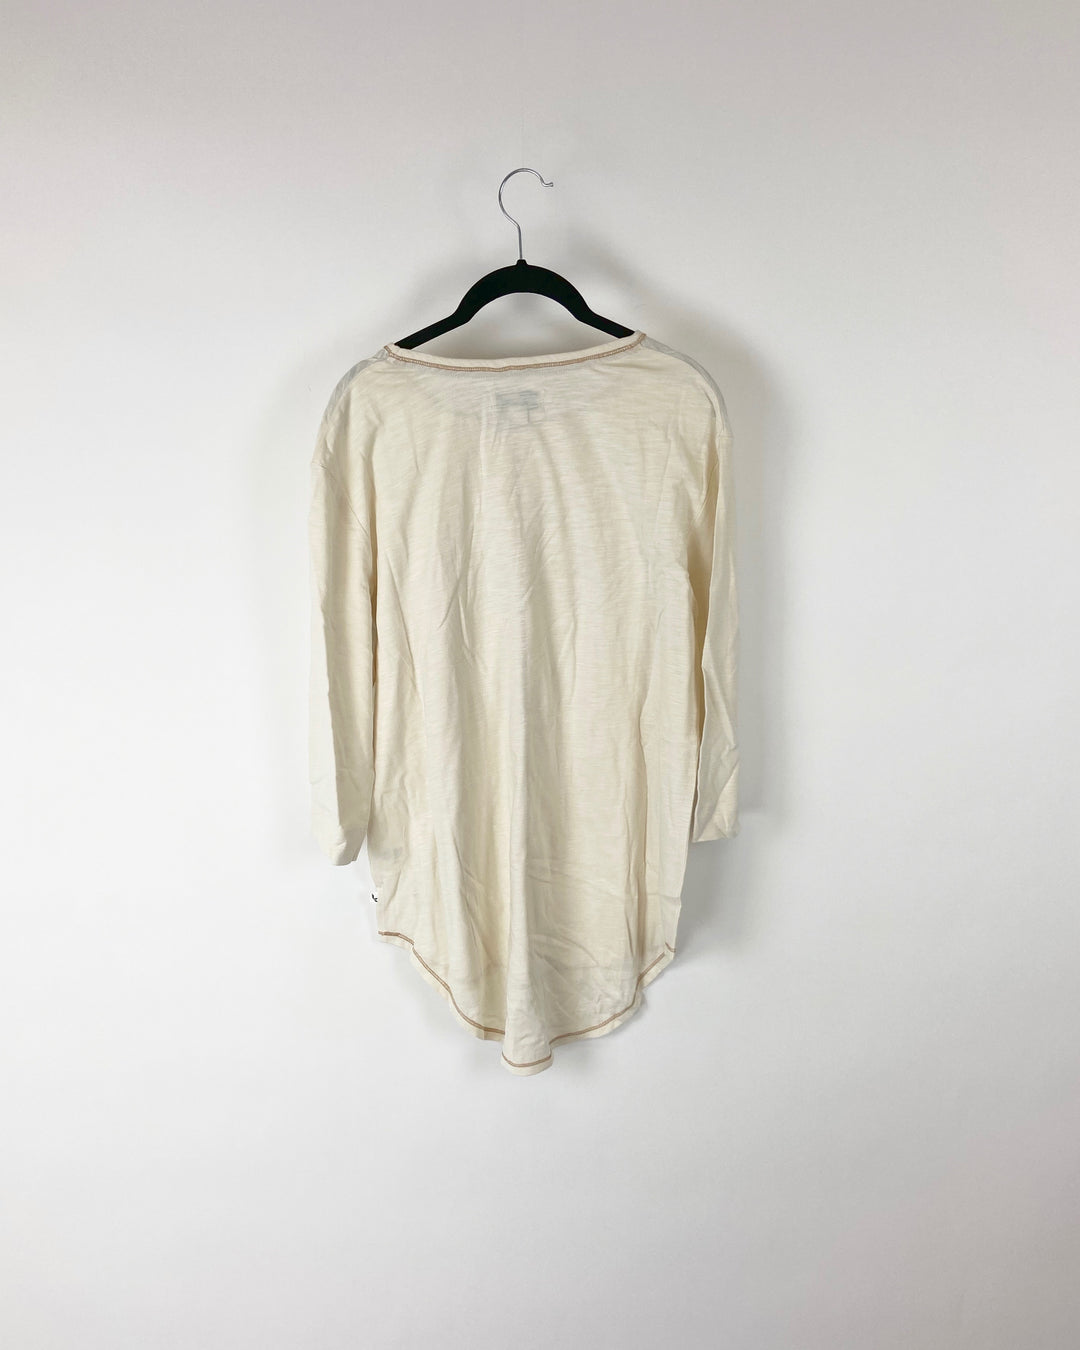 Cream Colored 3/4 Sleeve Shirt - Small & 1X